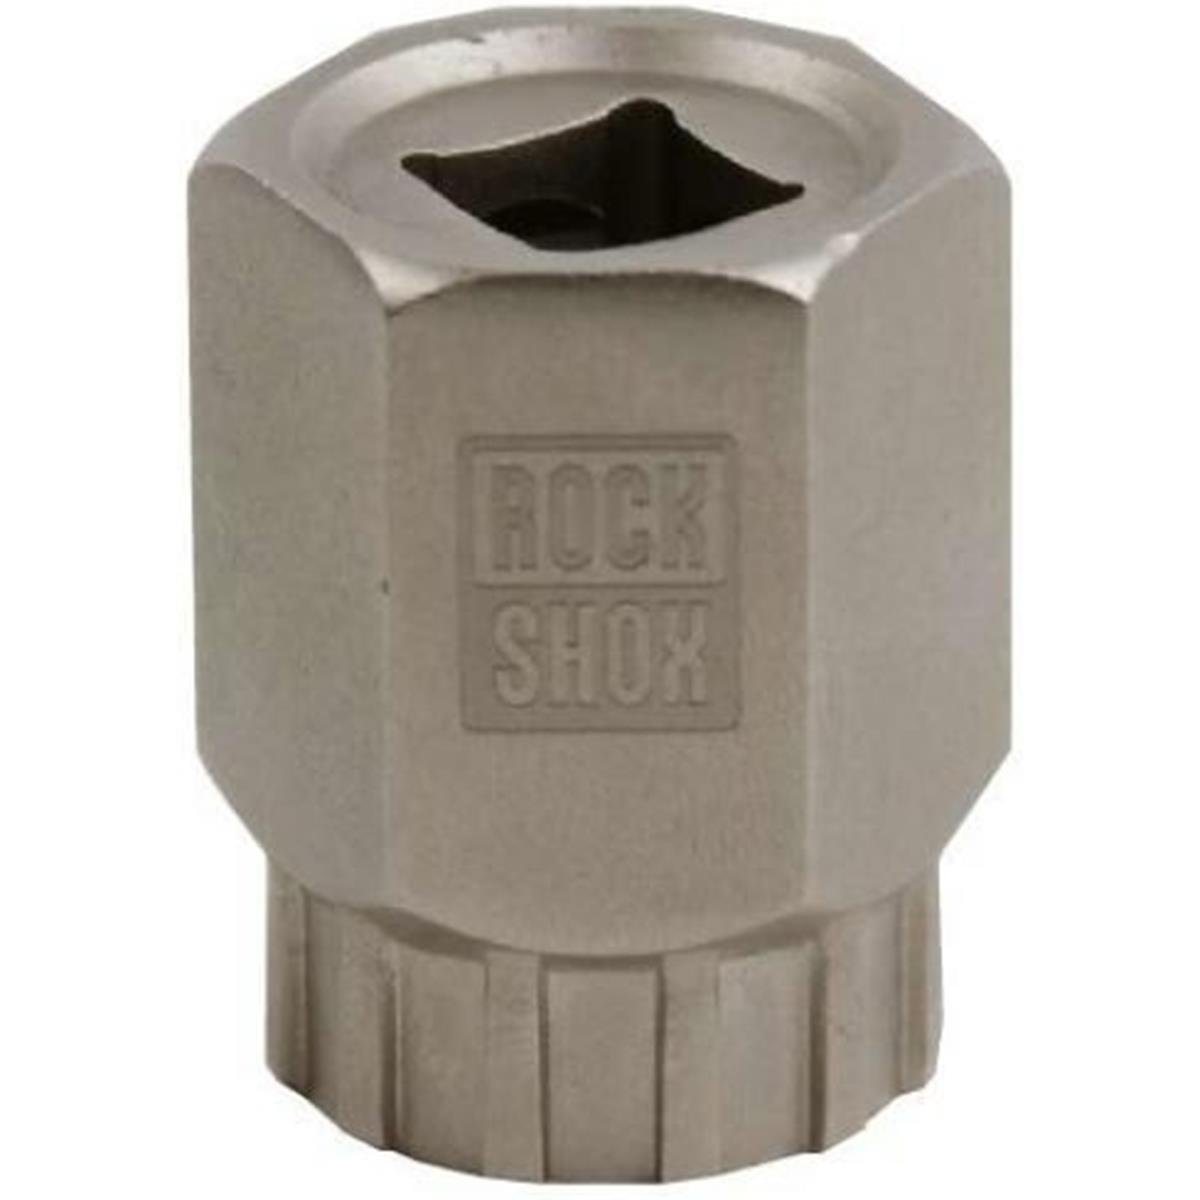 RockShox Cassette Lockring Tool  For Shimano and SRAM Cassettes